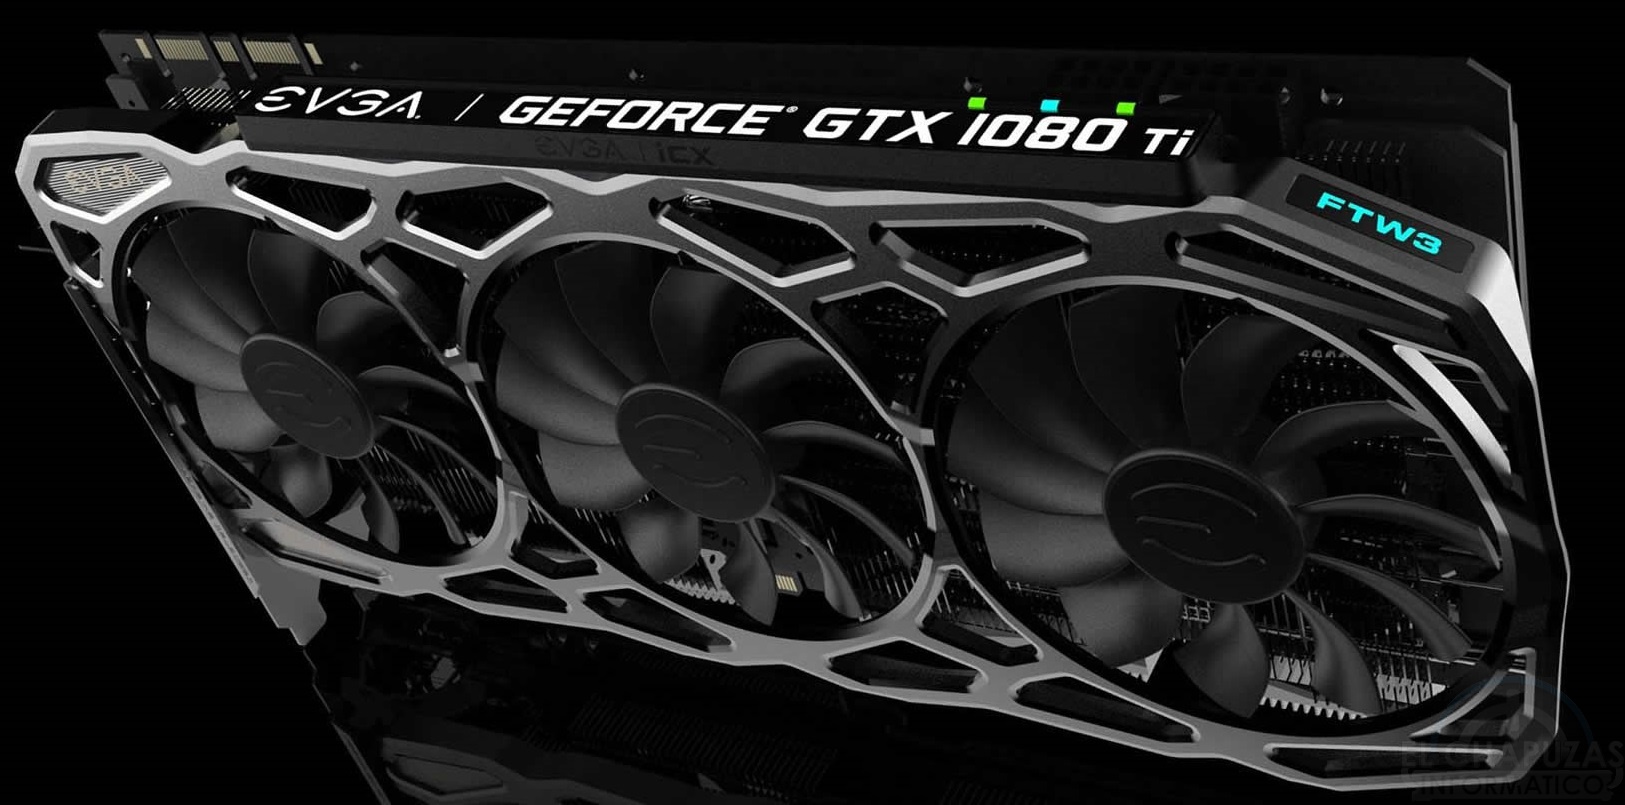 EVGA-GeForce-GTX-1080-Ti-FTW3.jpg